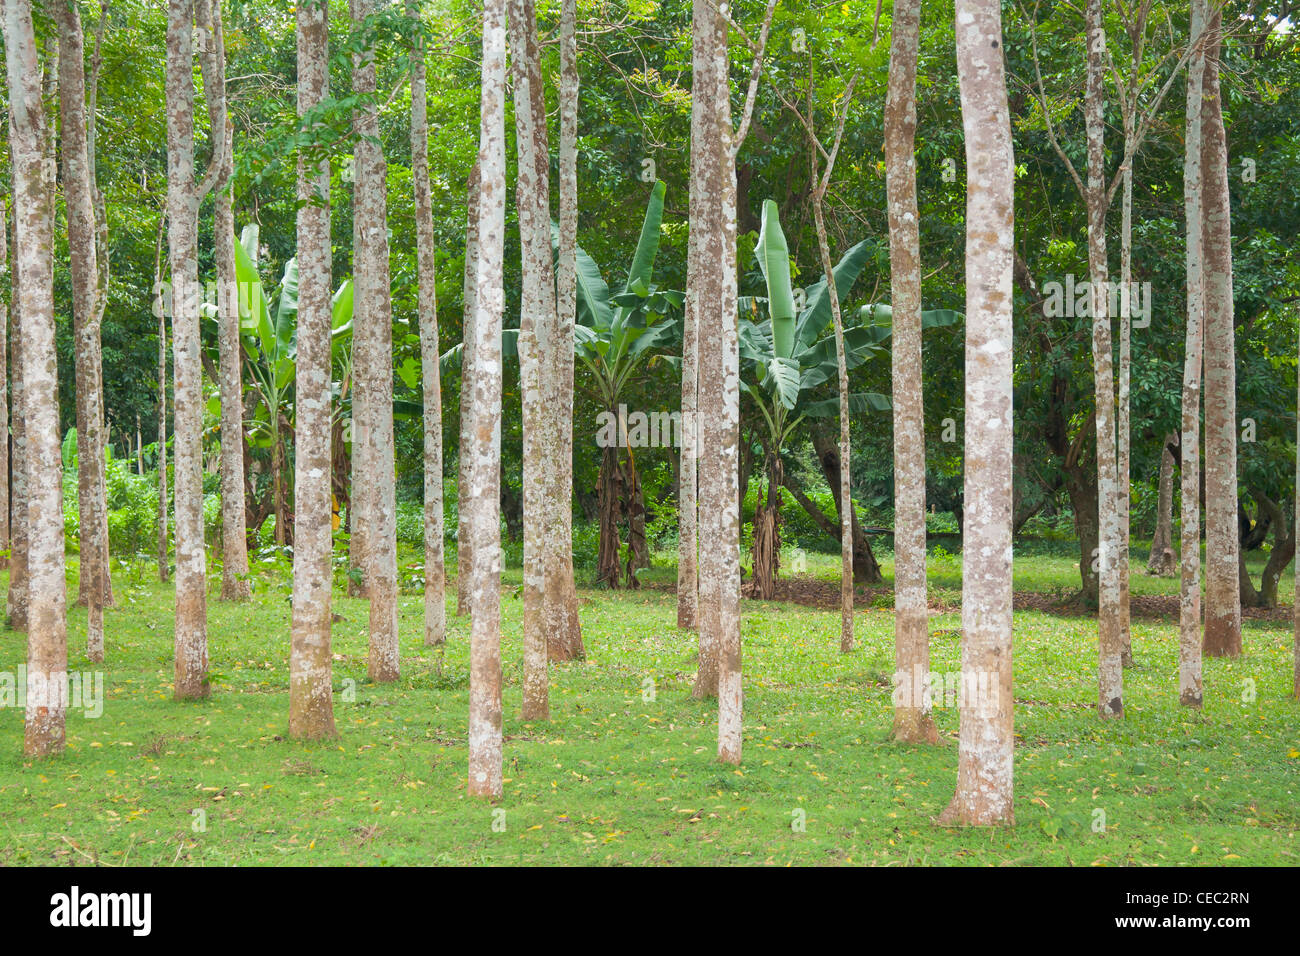 Rubber tree plantation, southern Thailand Stock Photo